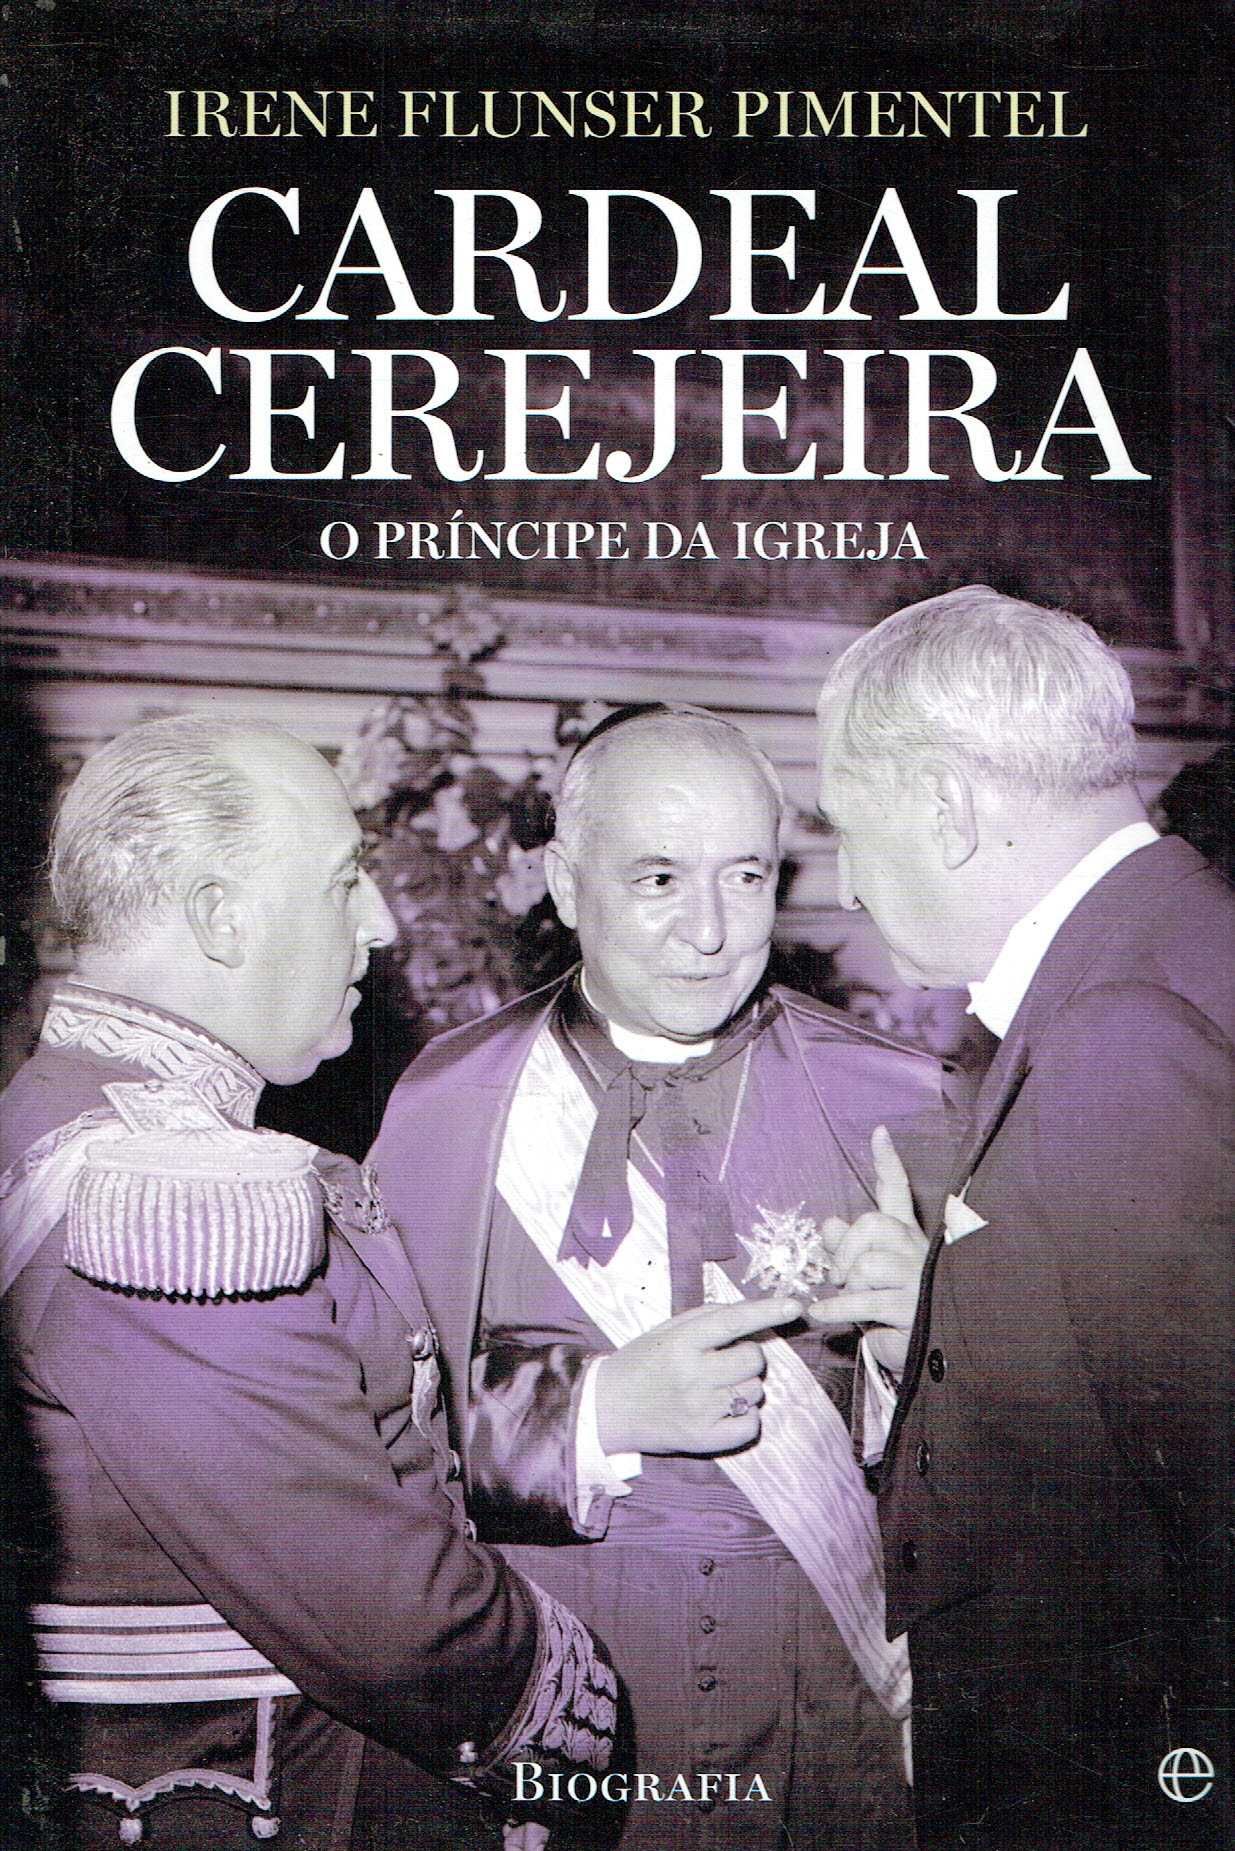 14319

Cardeal Cerejeira
de Irene Flunser Pimentel